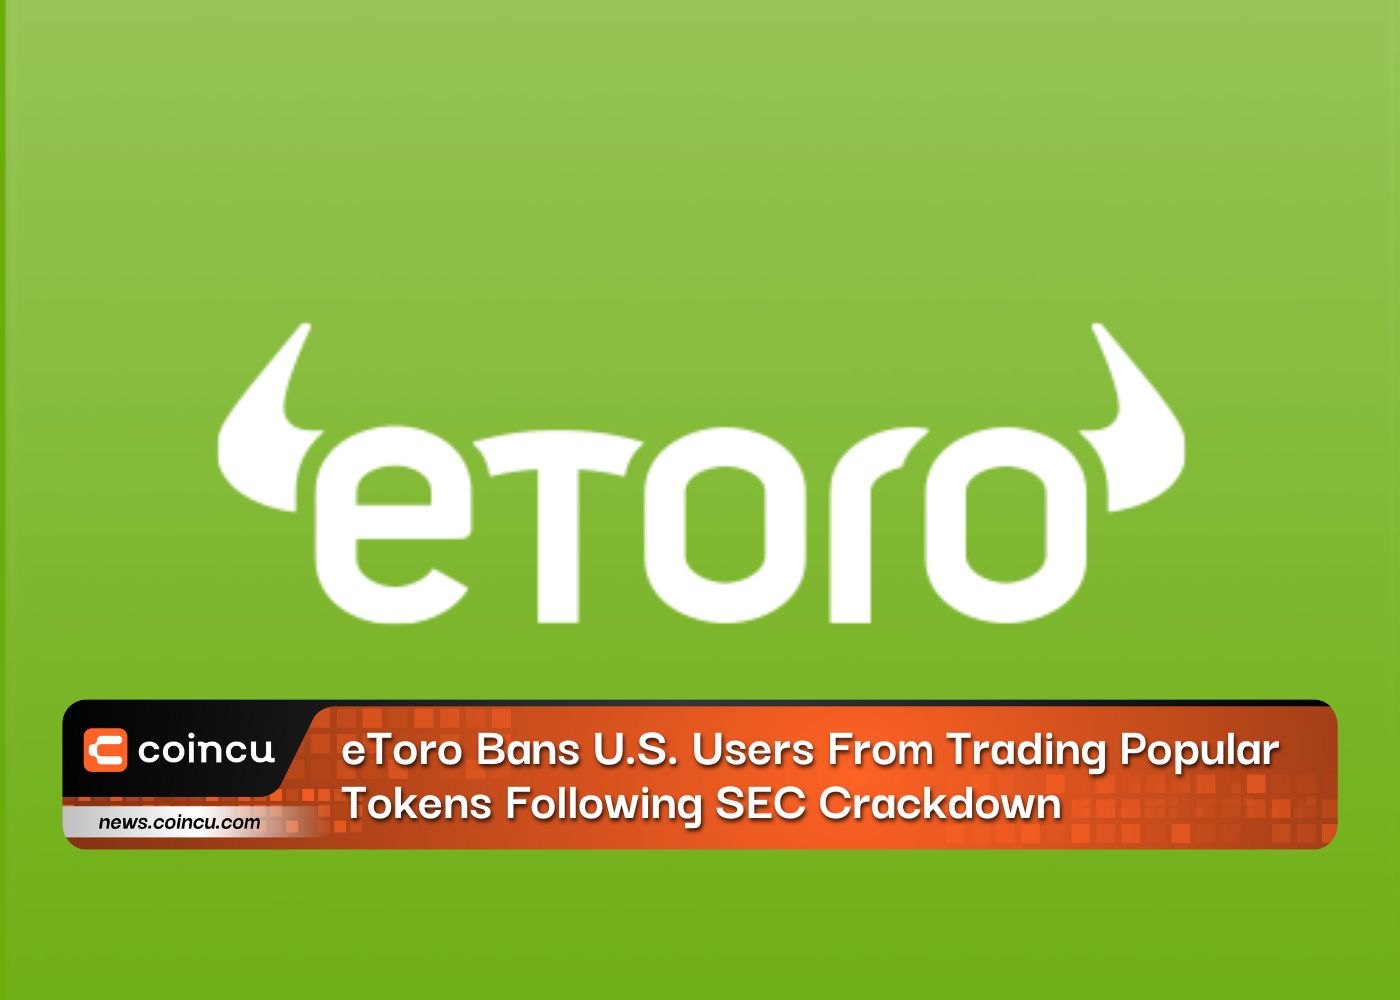 eToro Bans U.S. Users From Trading Popular Tokens Following SEC Crackdown